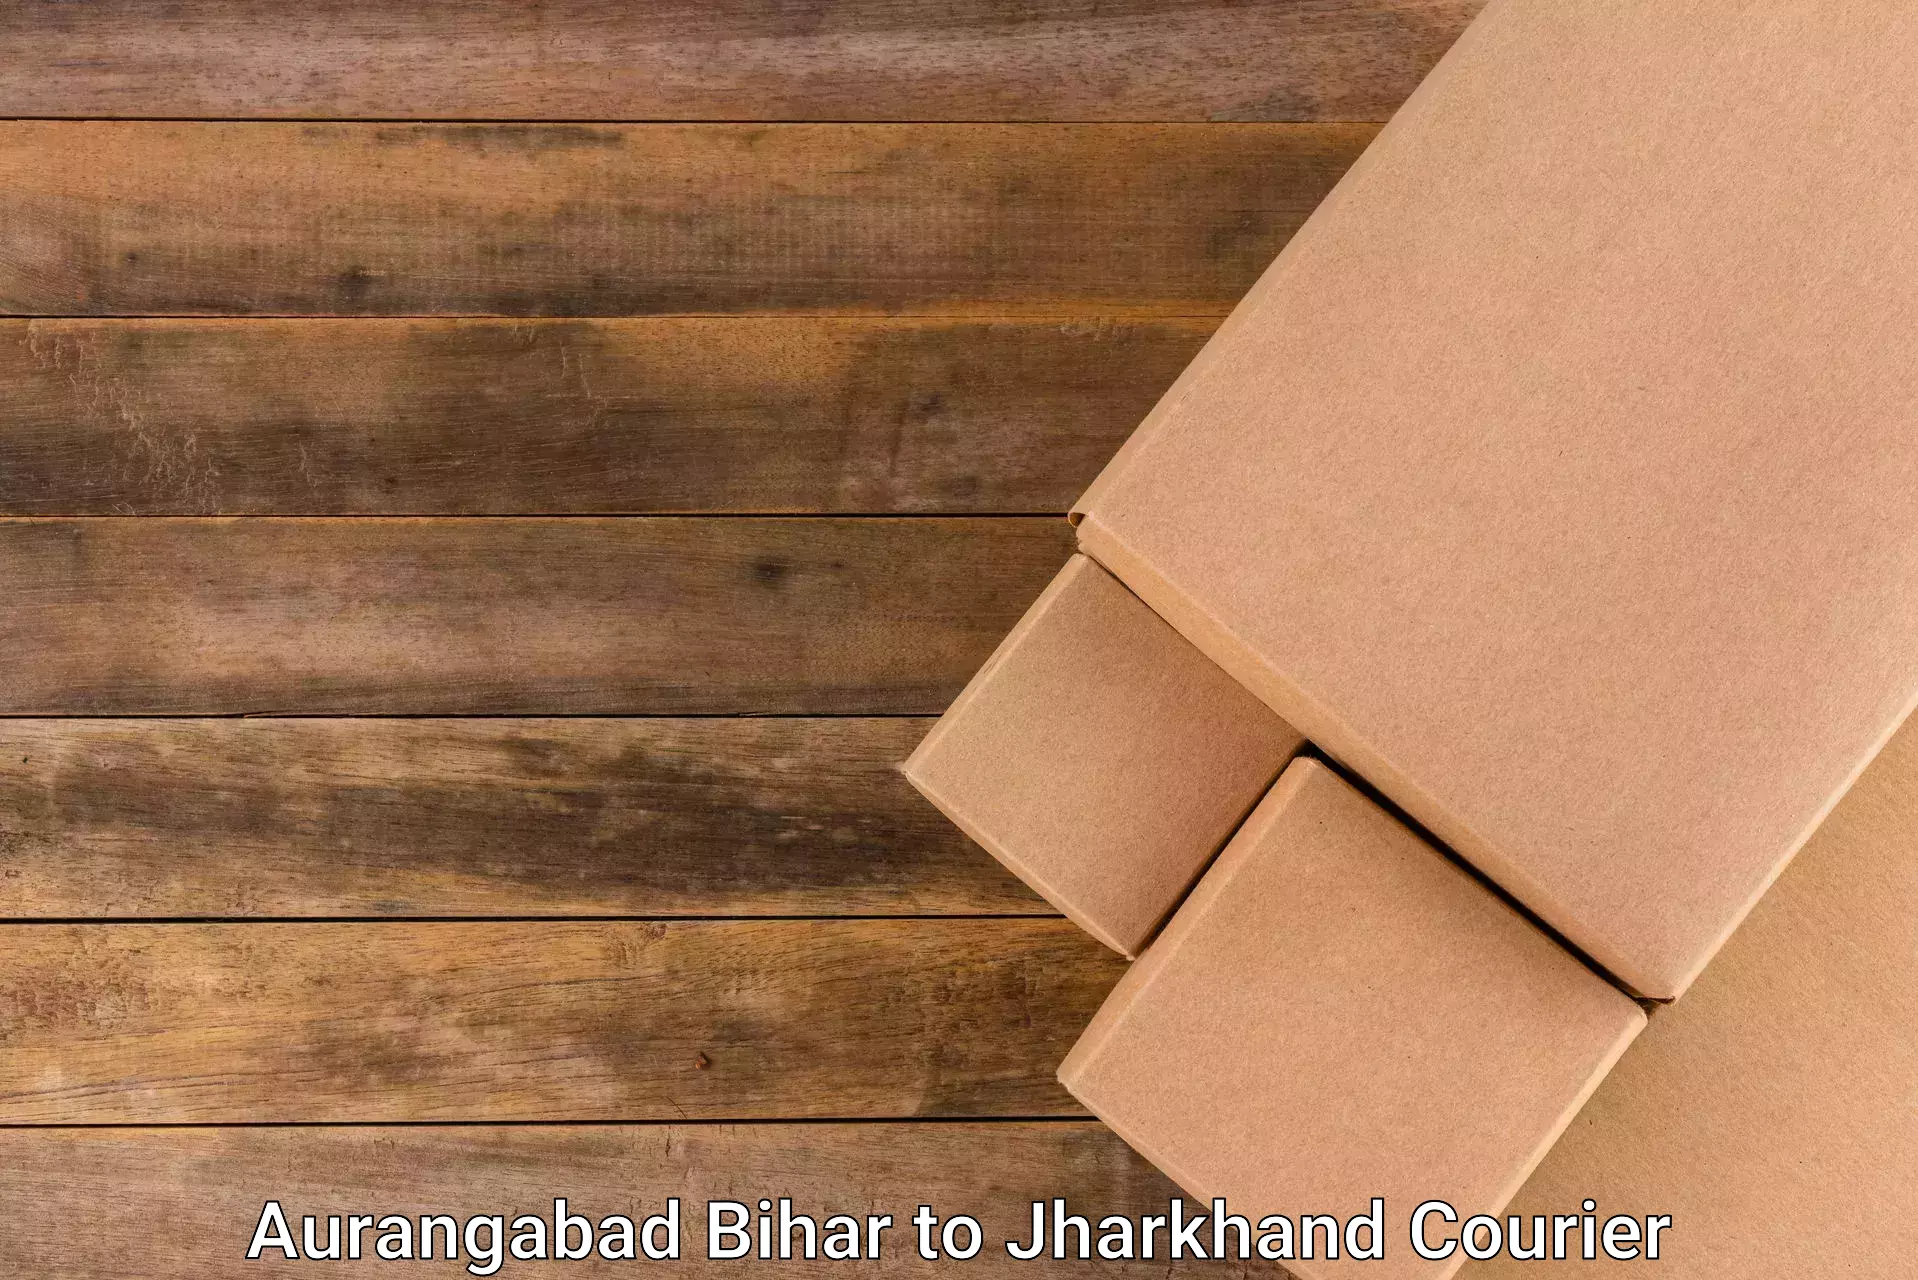 Cargo delivery service Aurangabad Bihar to Manoharpur